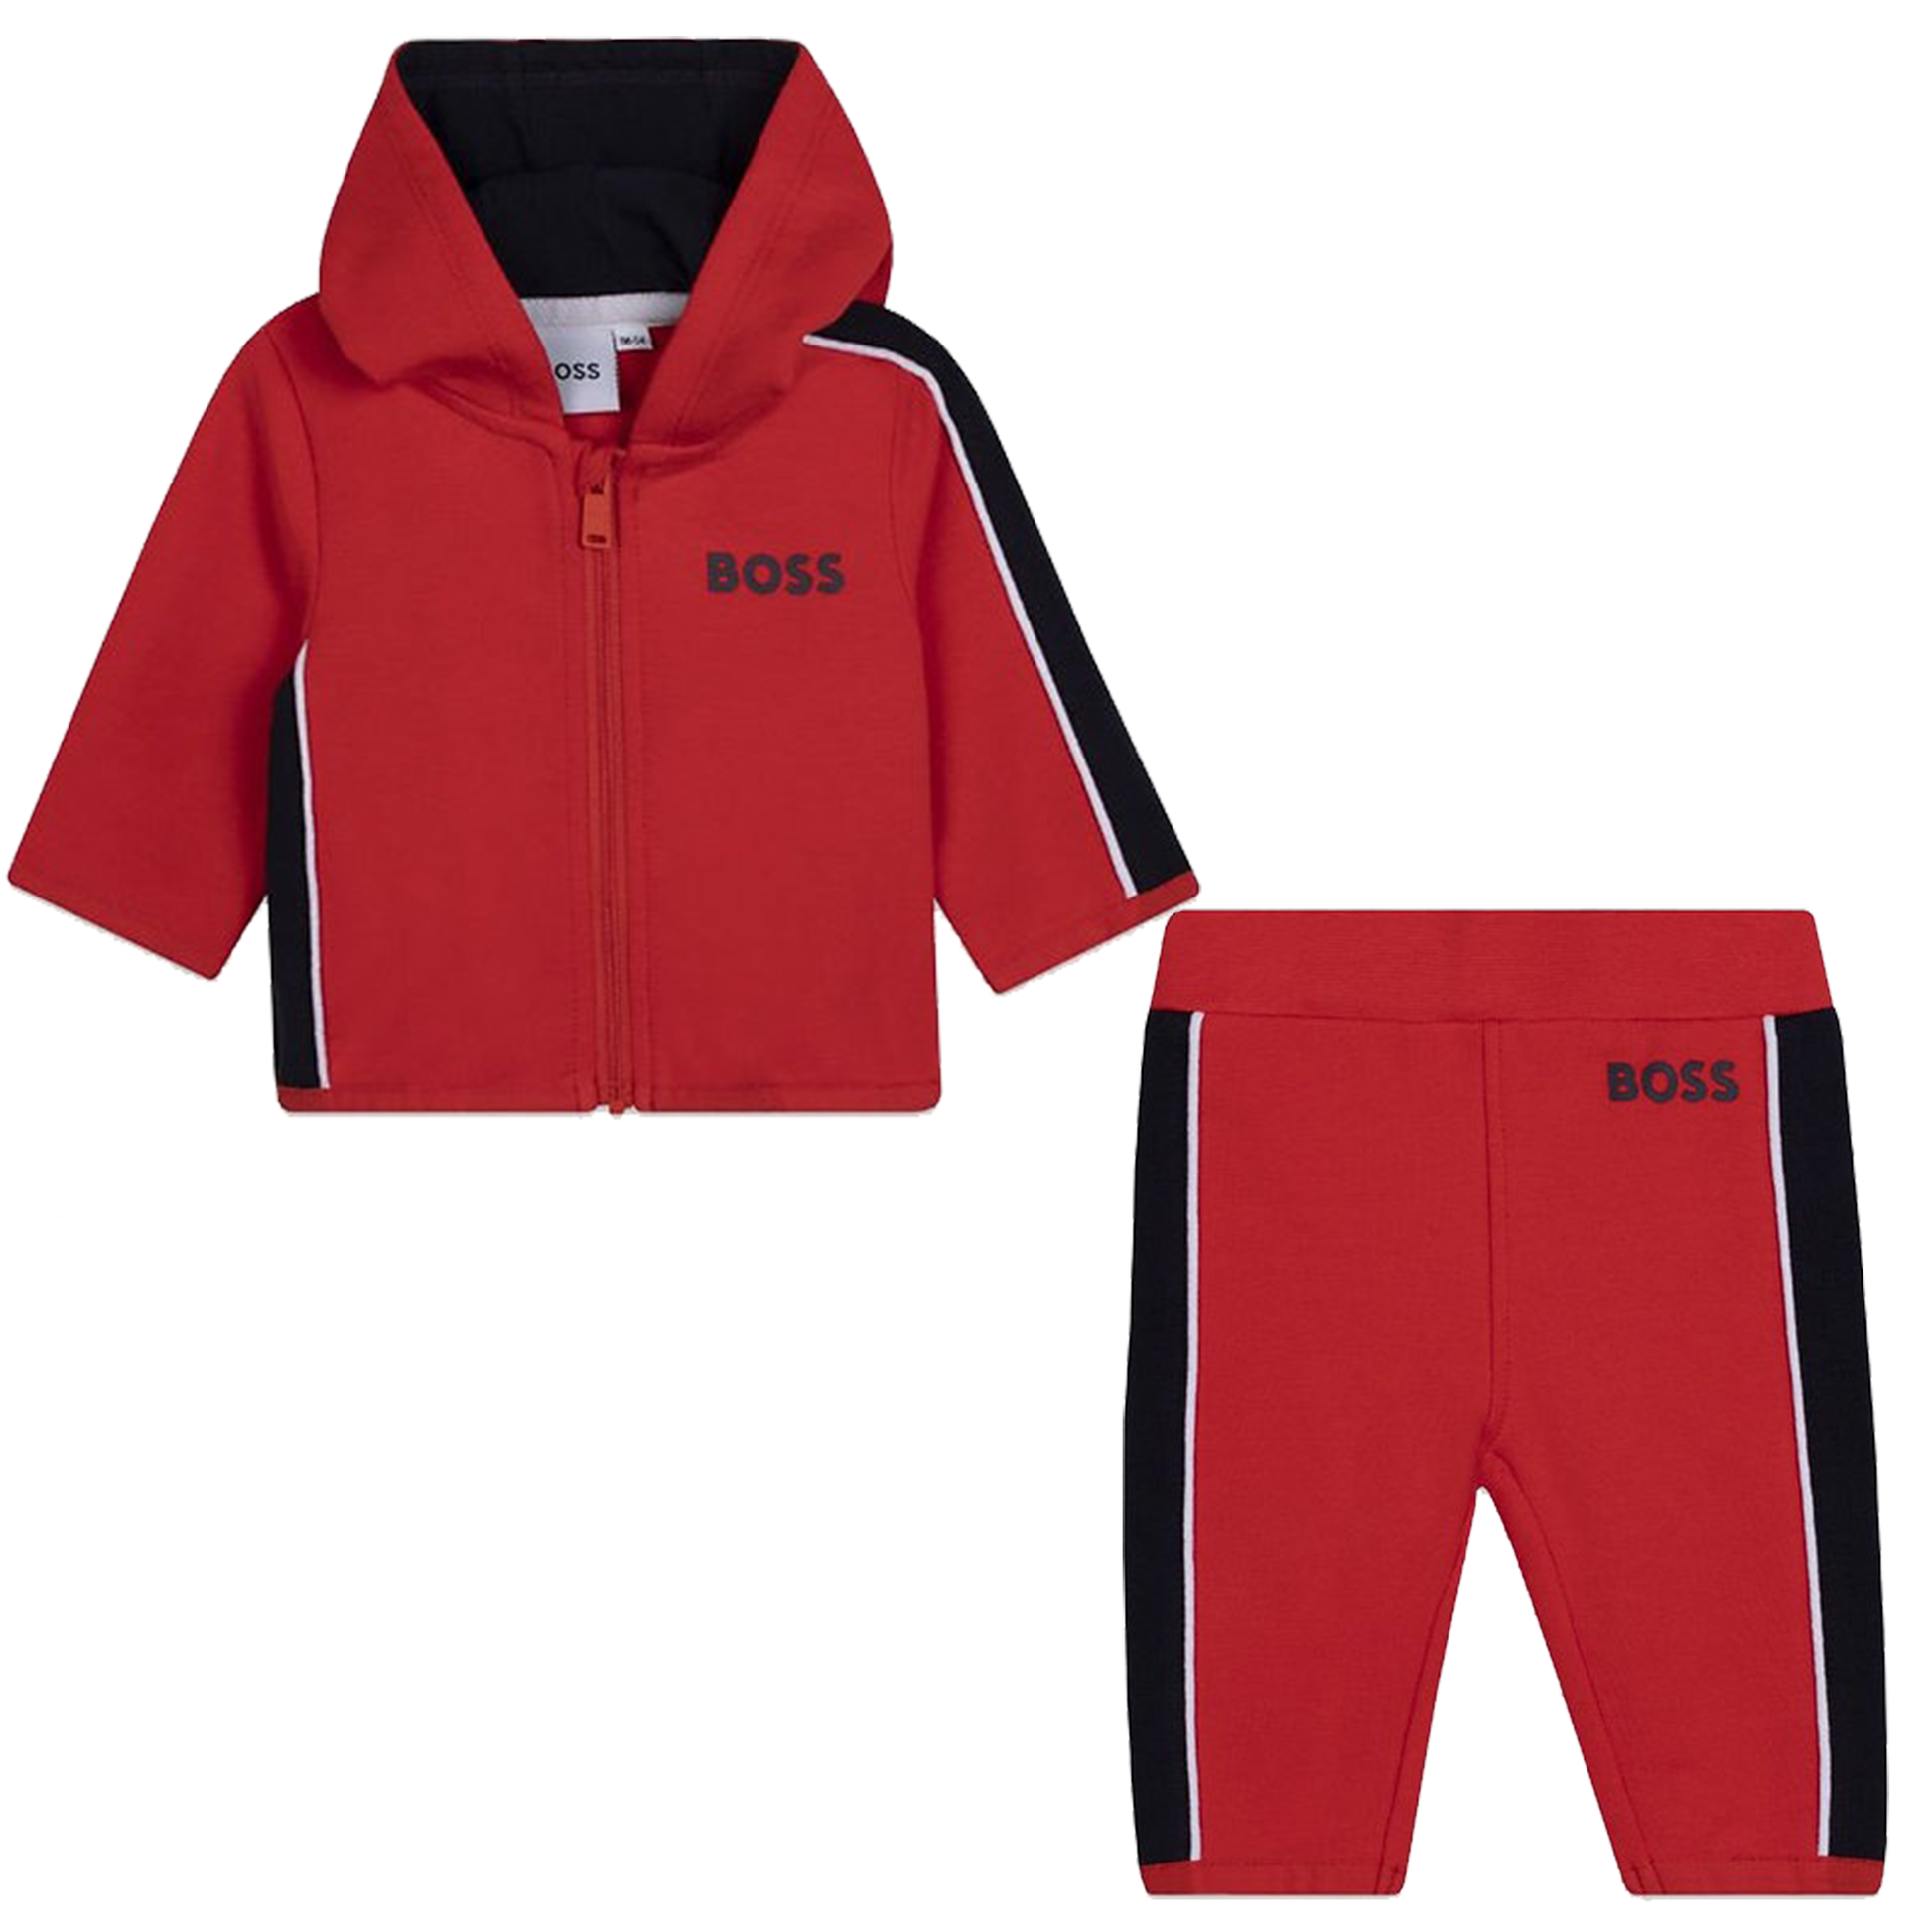 Hugo Boss Kid's 2 Piece Outfit Infants - Color: Orange - Kids Premium Clothing -